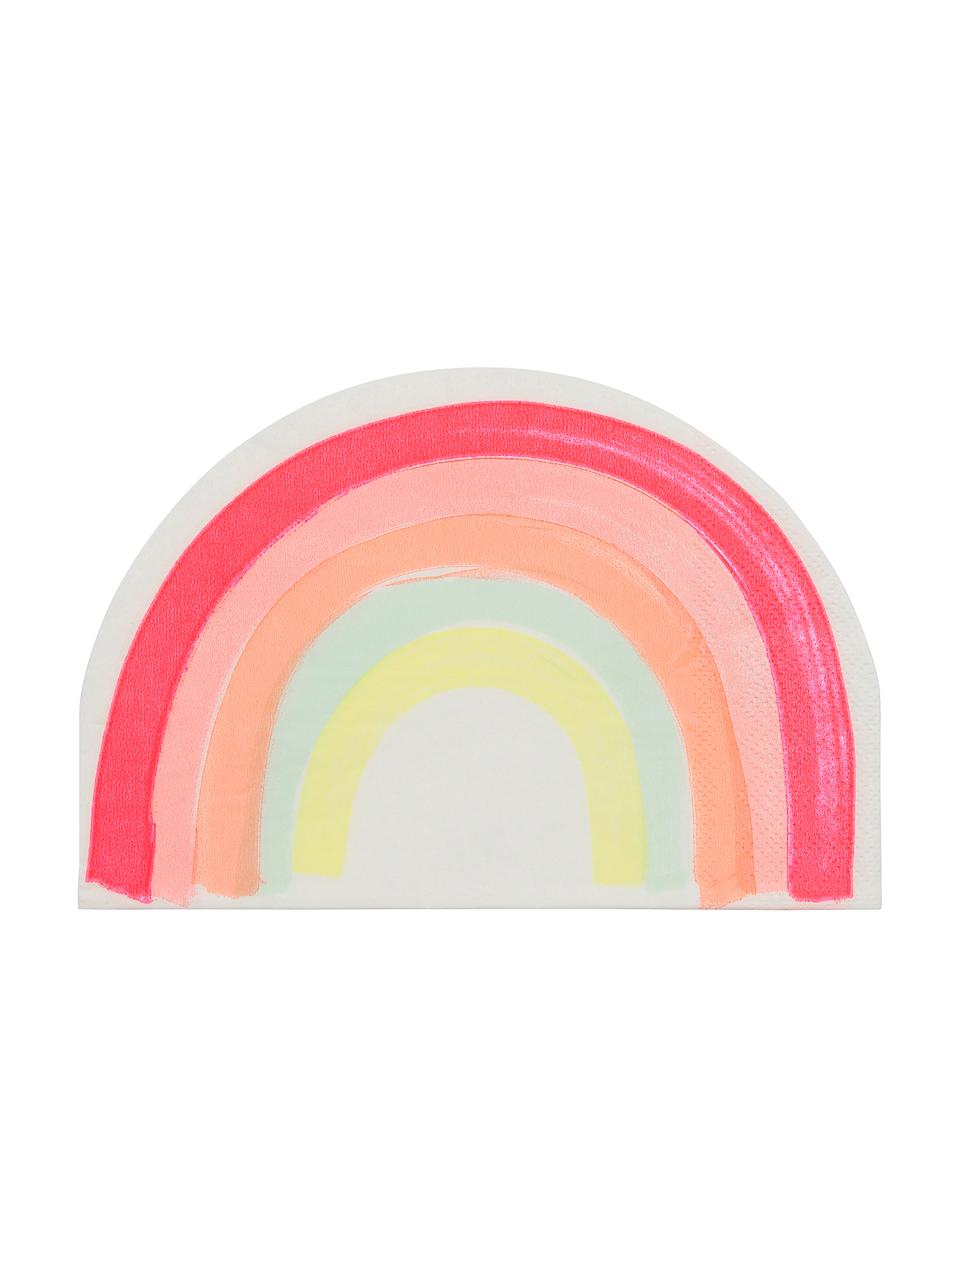 Papier-Servietten Rainbow, 20 Stück, Papier, Mehrfarbig, 12 x 17 cm